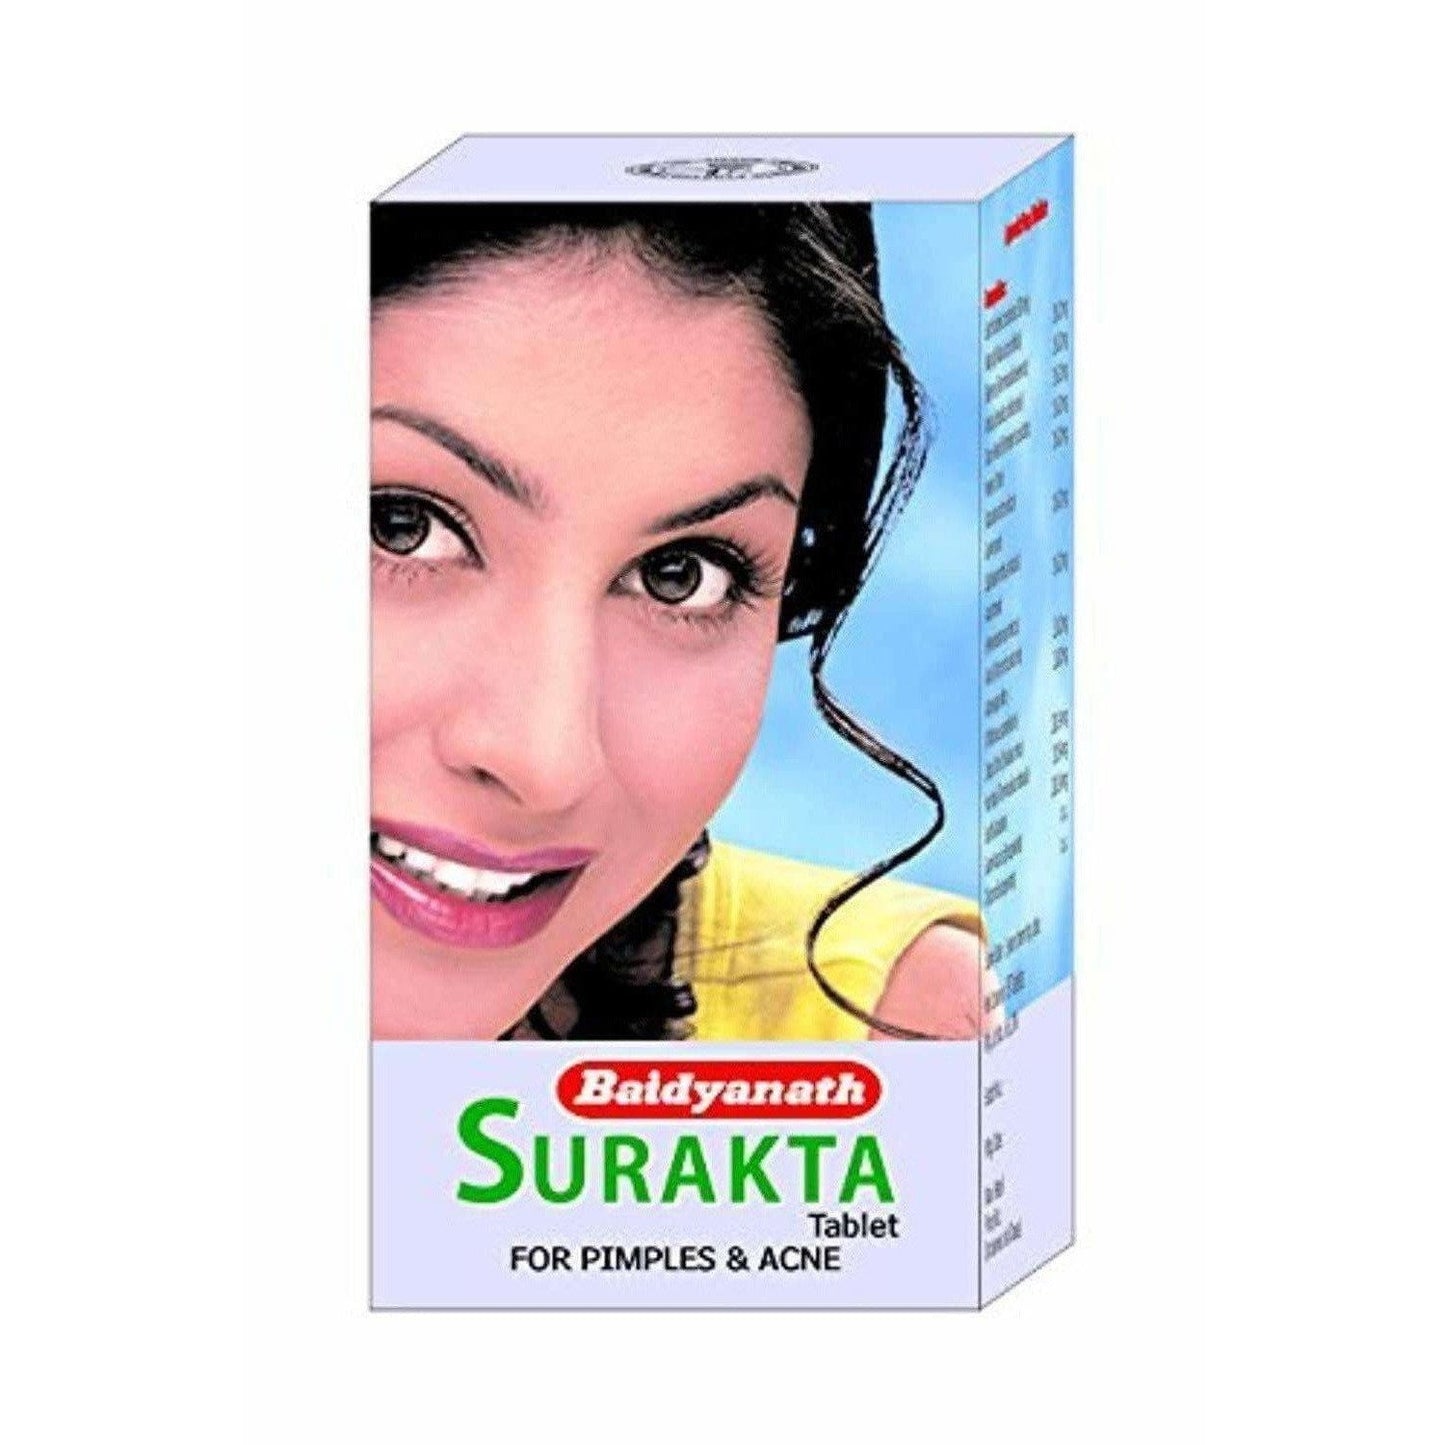 Baidyanath Surakta Tablets - Pack of 2